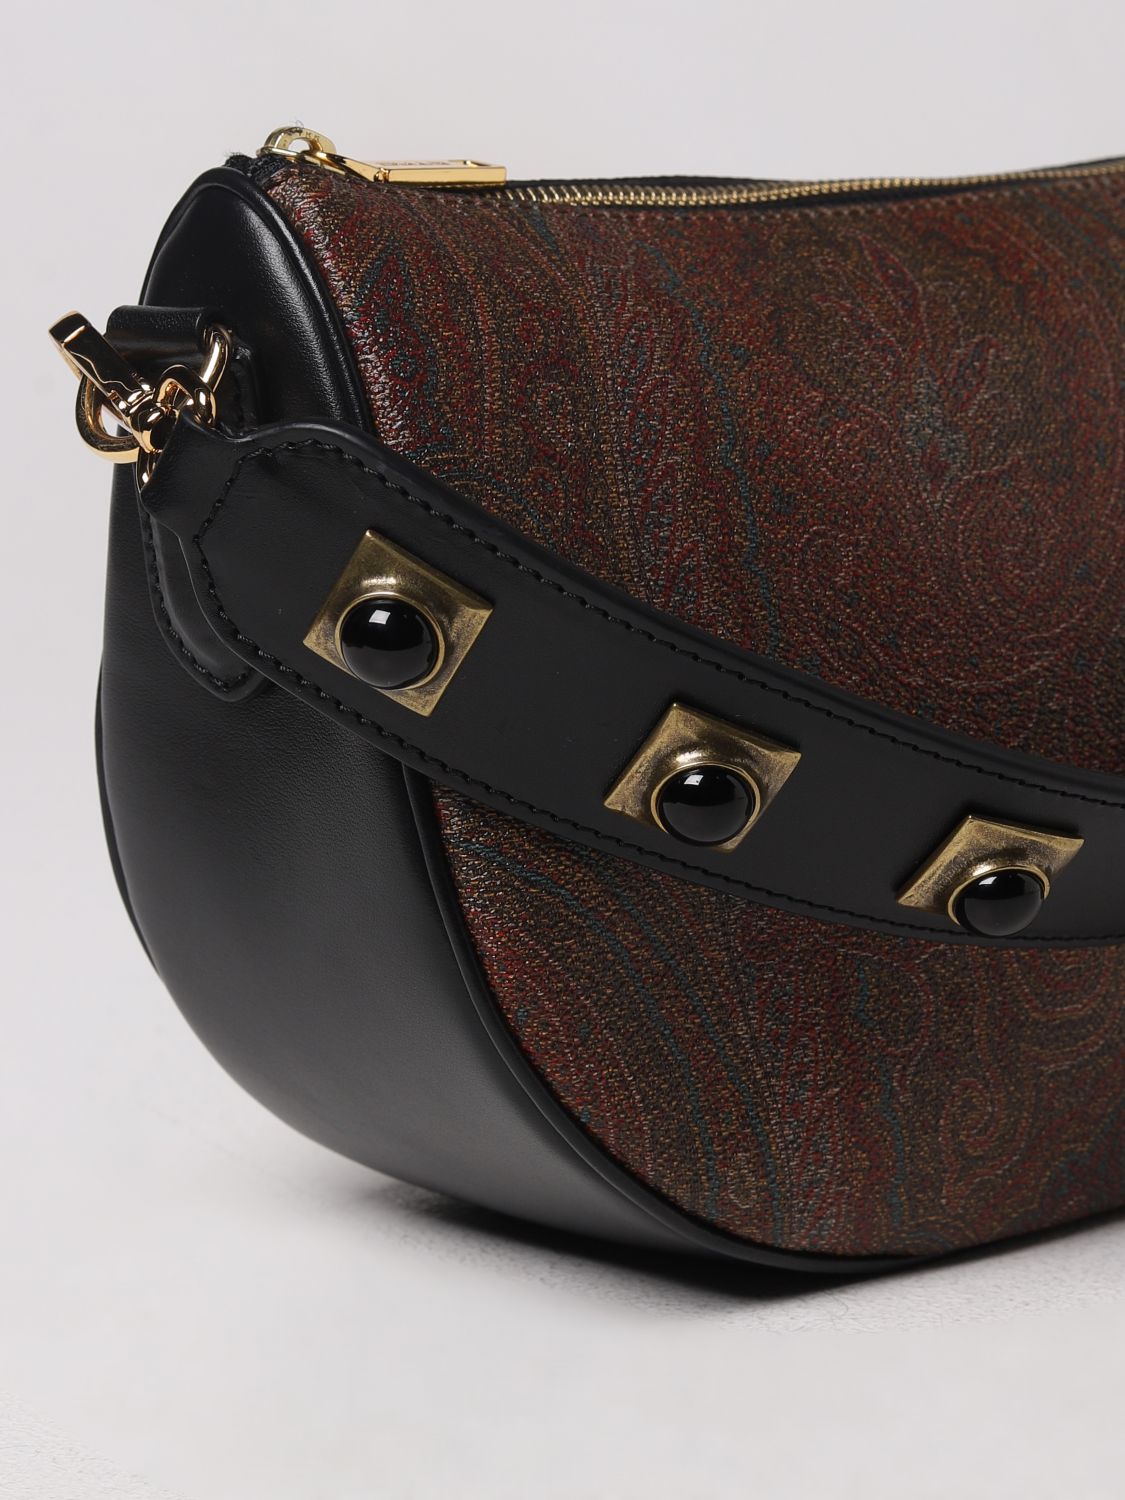 ETRO: Paisley bag in coated cotton - Multicolor  Etro shoulder bag  014278040 online at